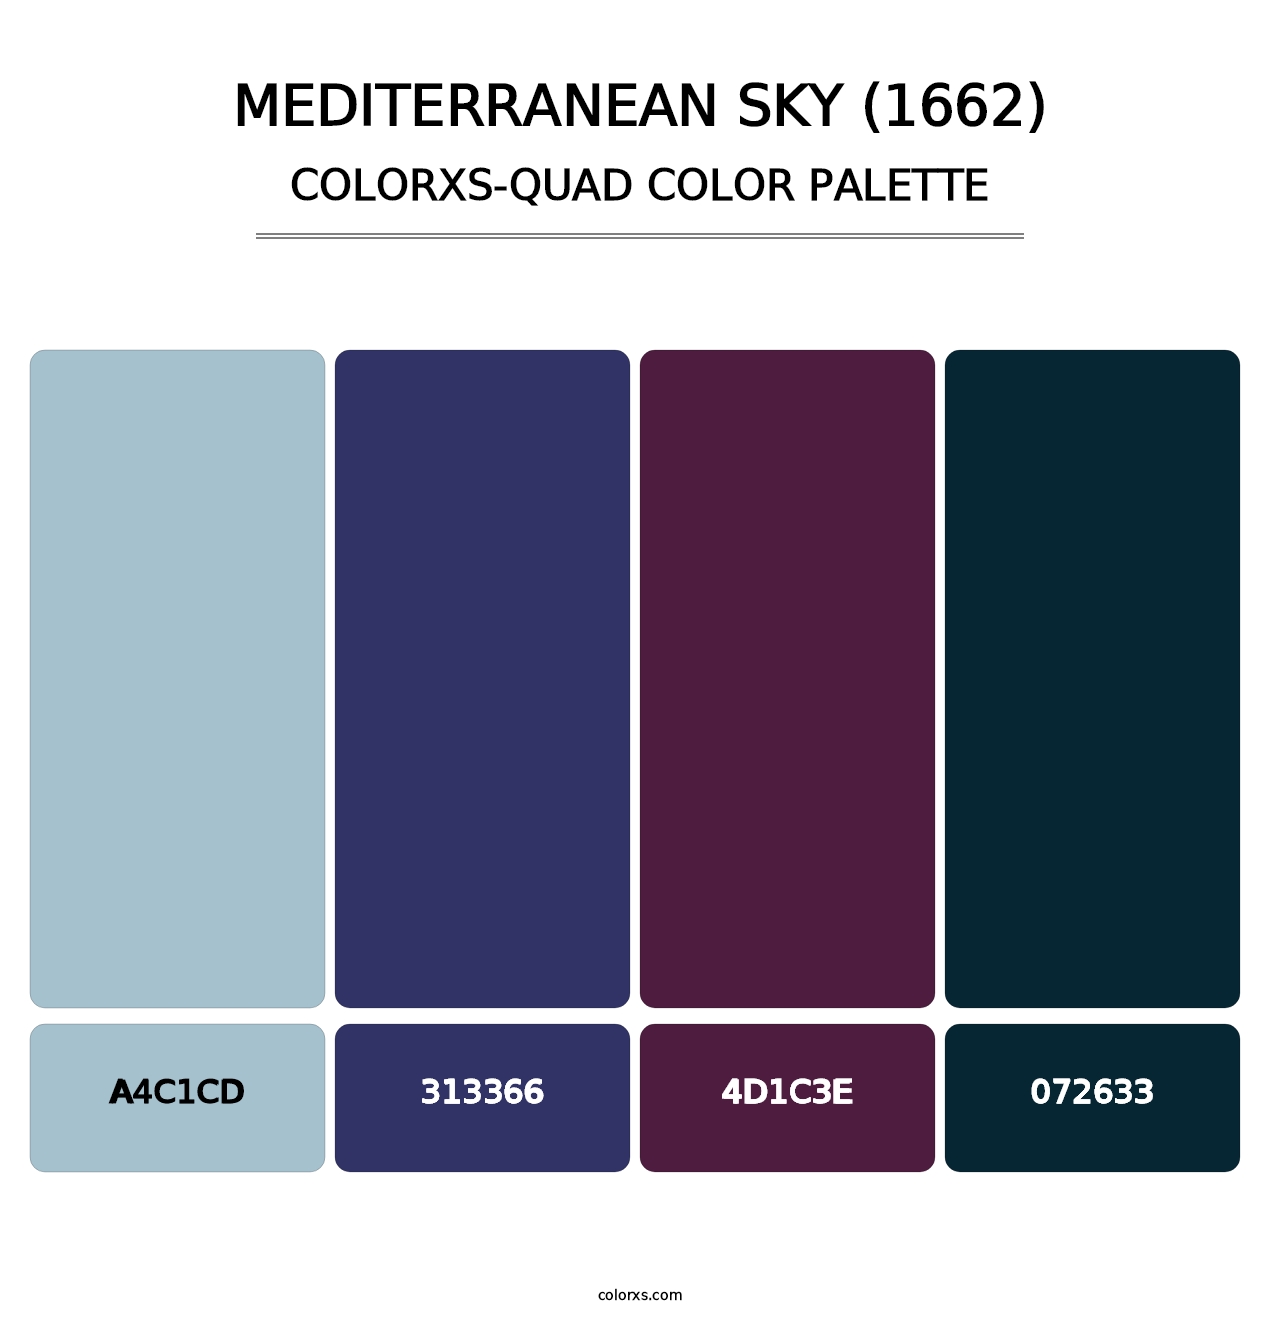 Mediterranean Sky (1662) - Colorxs Quad Palette